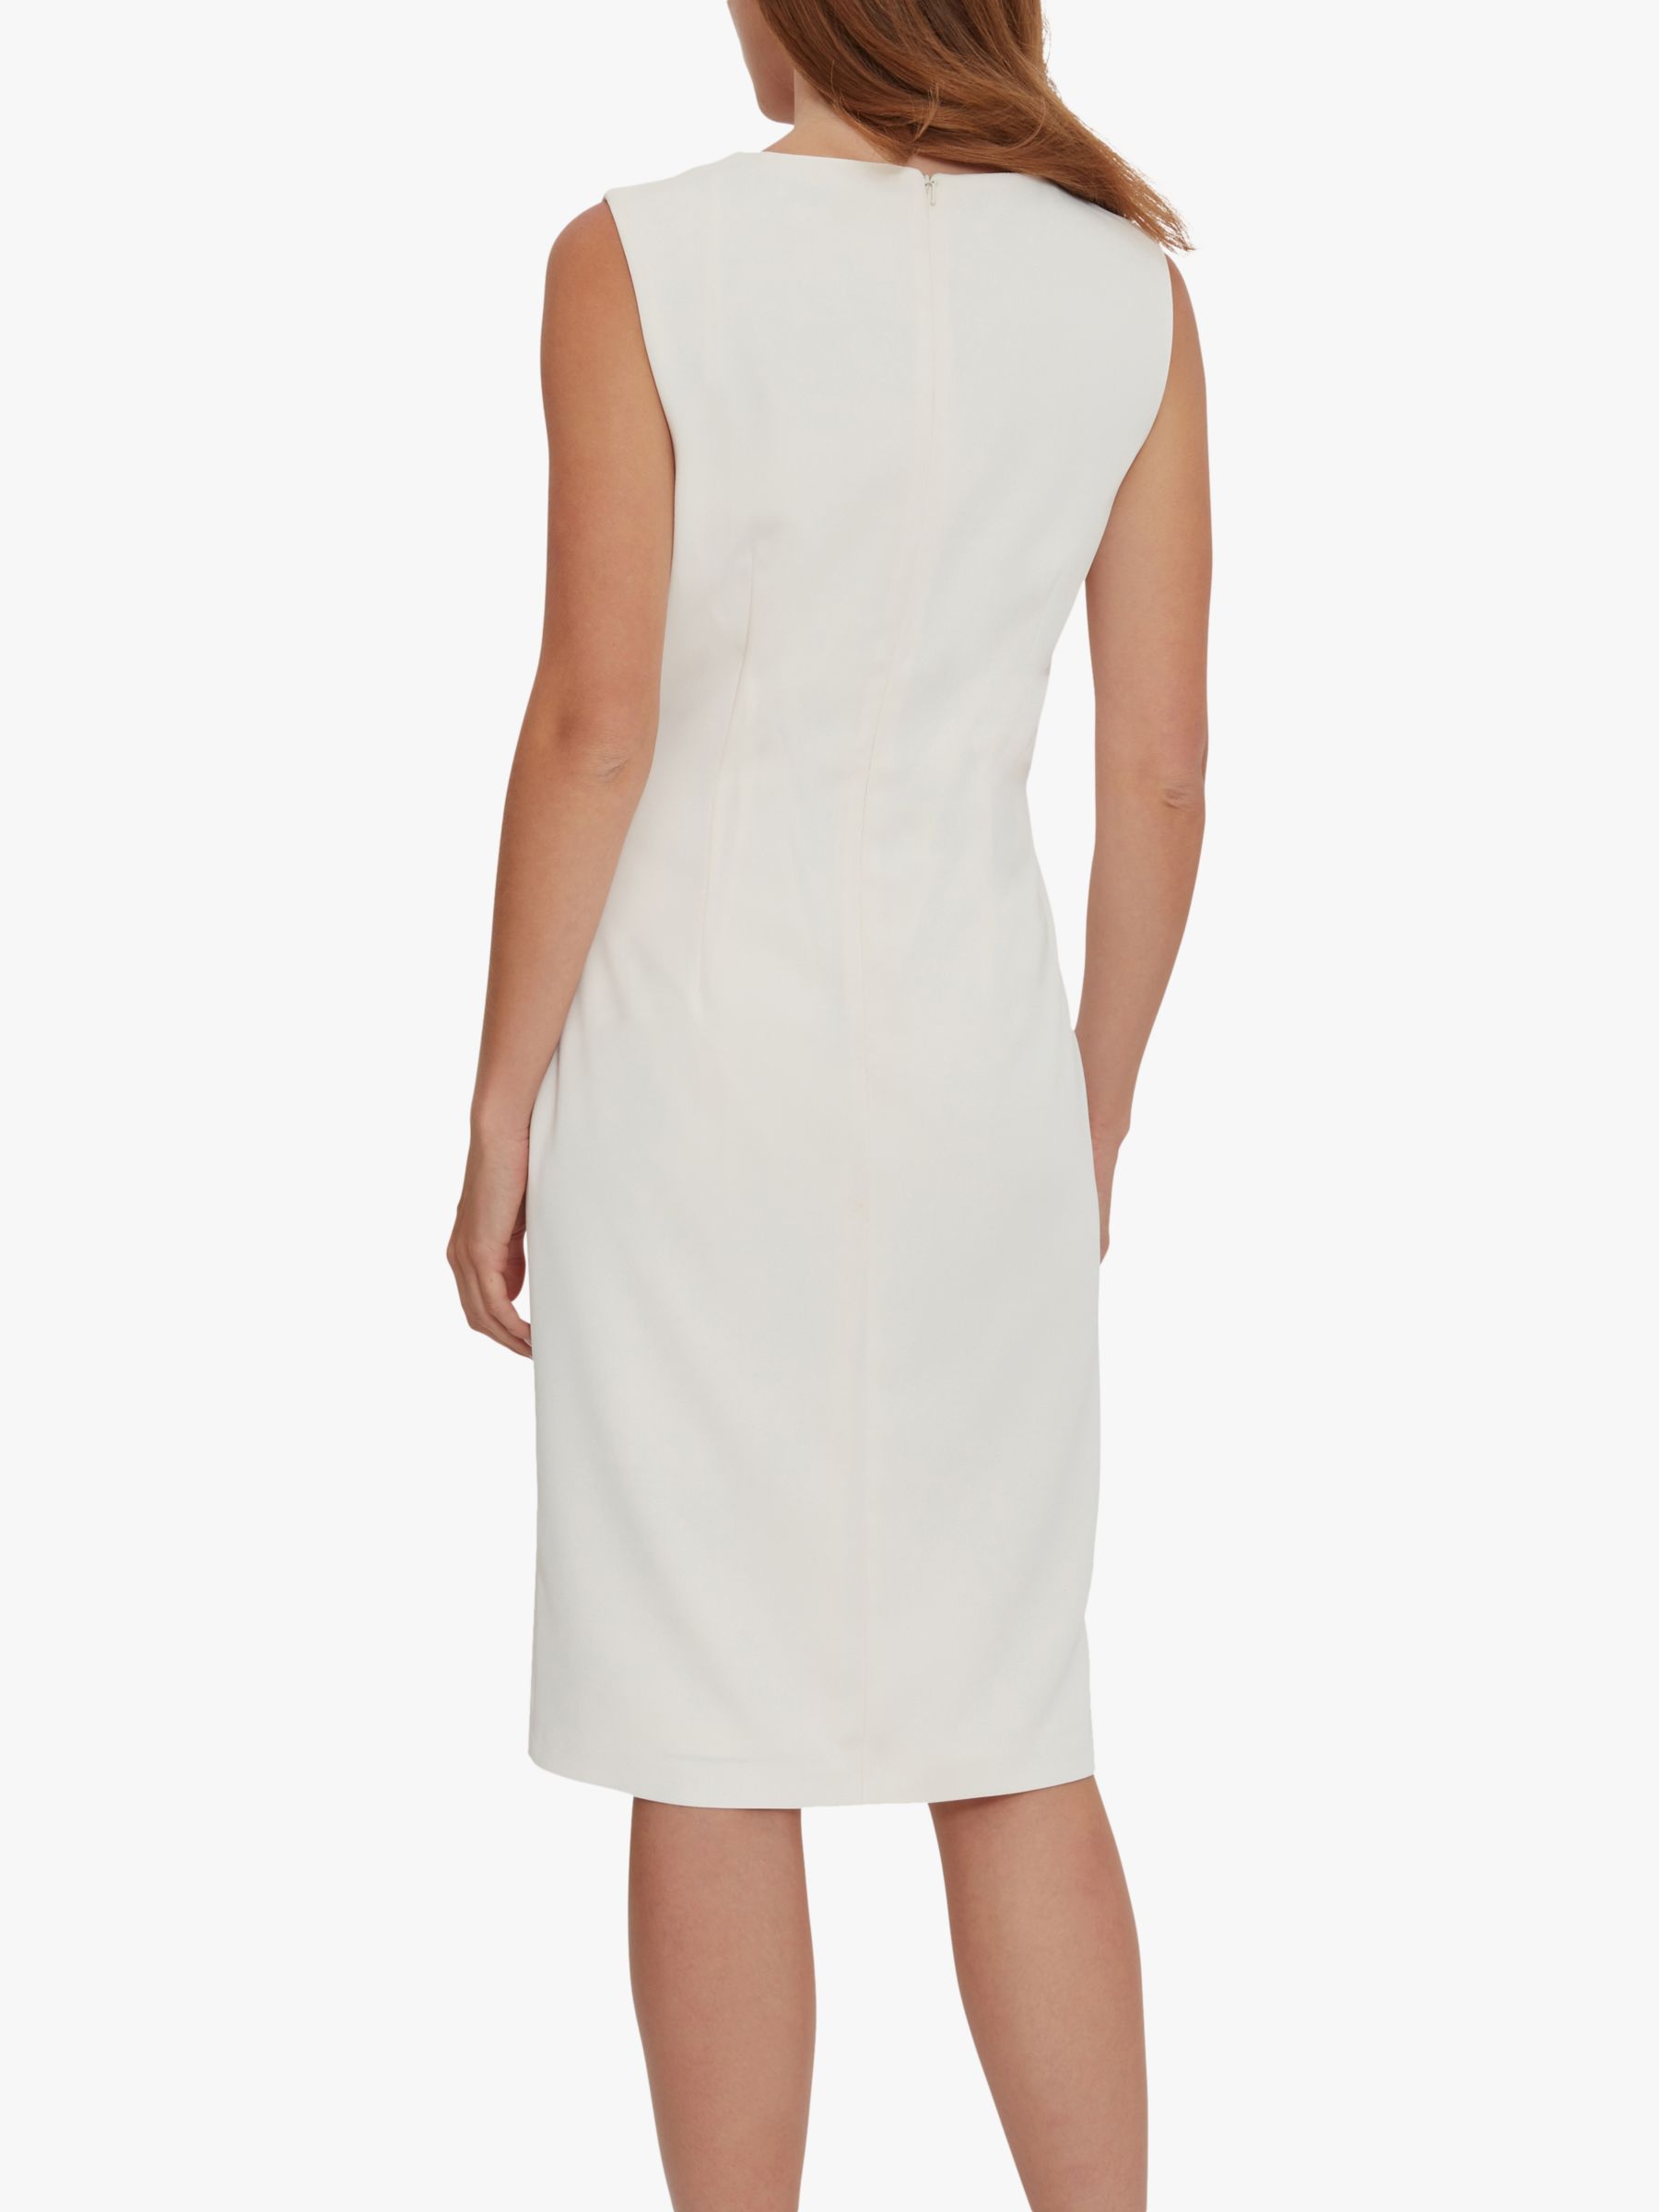 Gina Bacconi Leyanna Moss Tailored Dress, Ivory at John Lewis & Partners